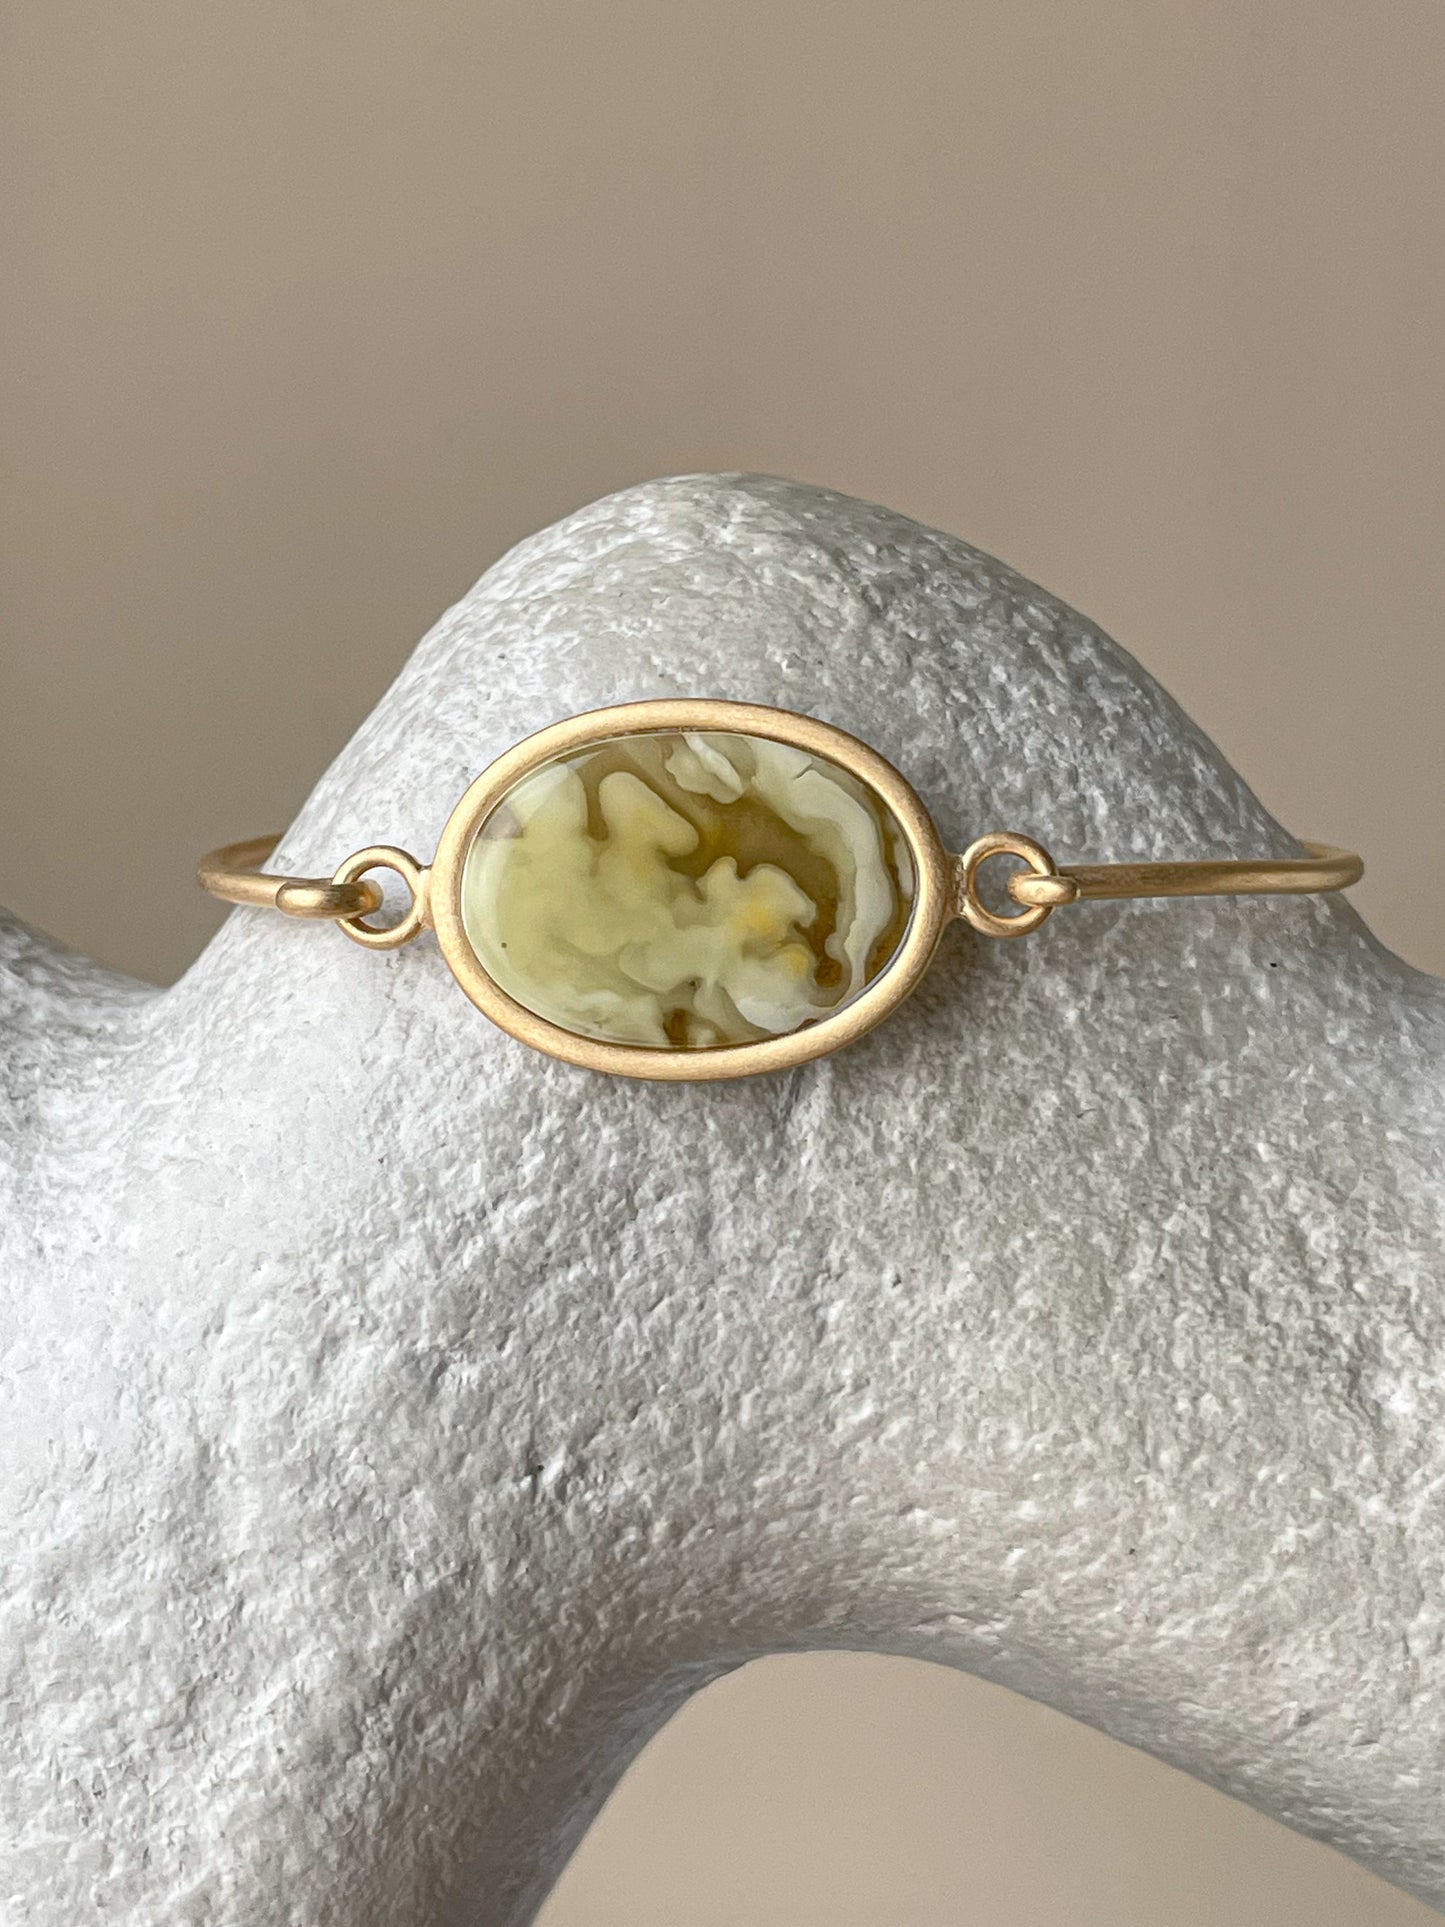 Landscape amber bangle bracelet - gold plated silver, size 6.8